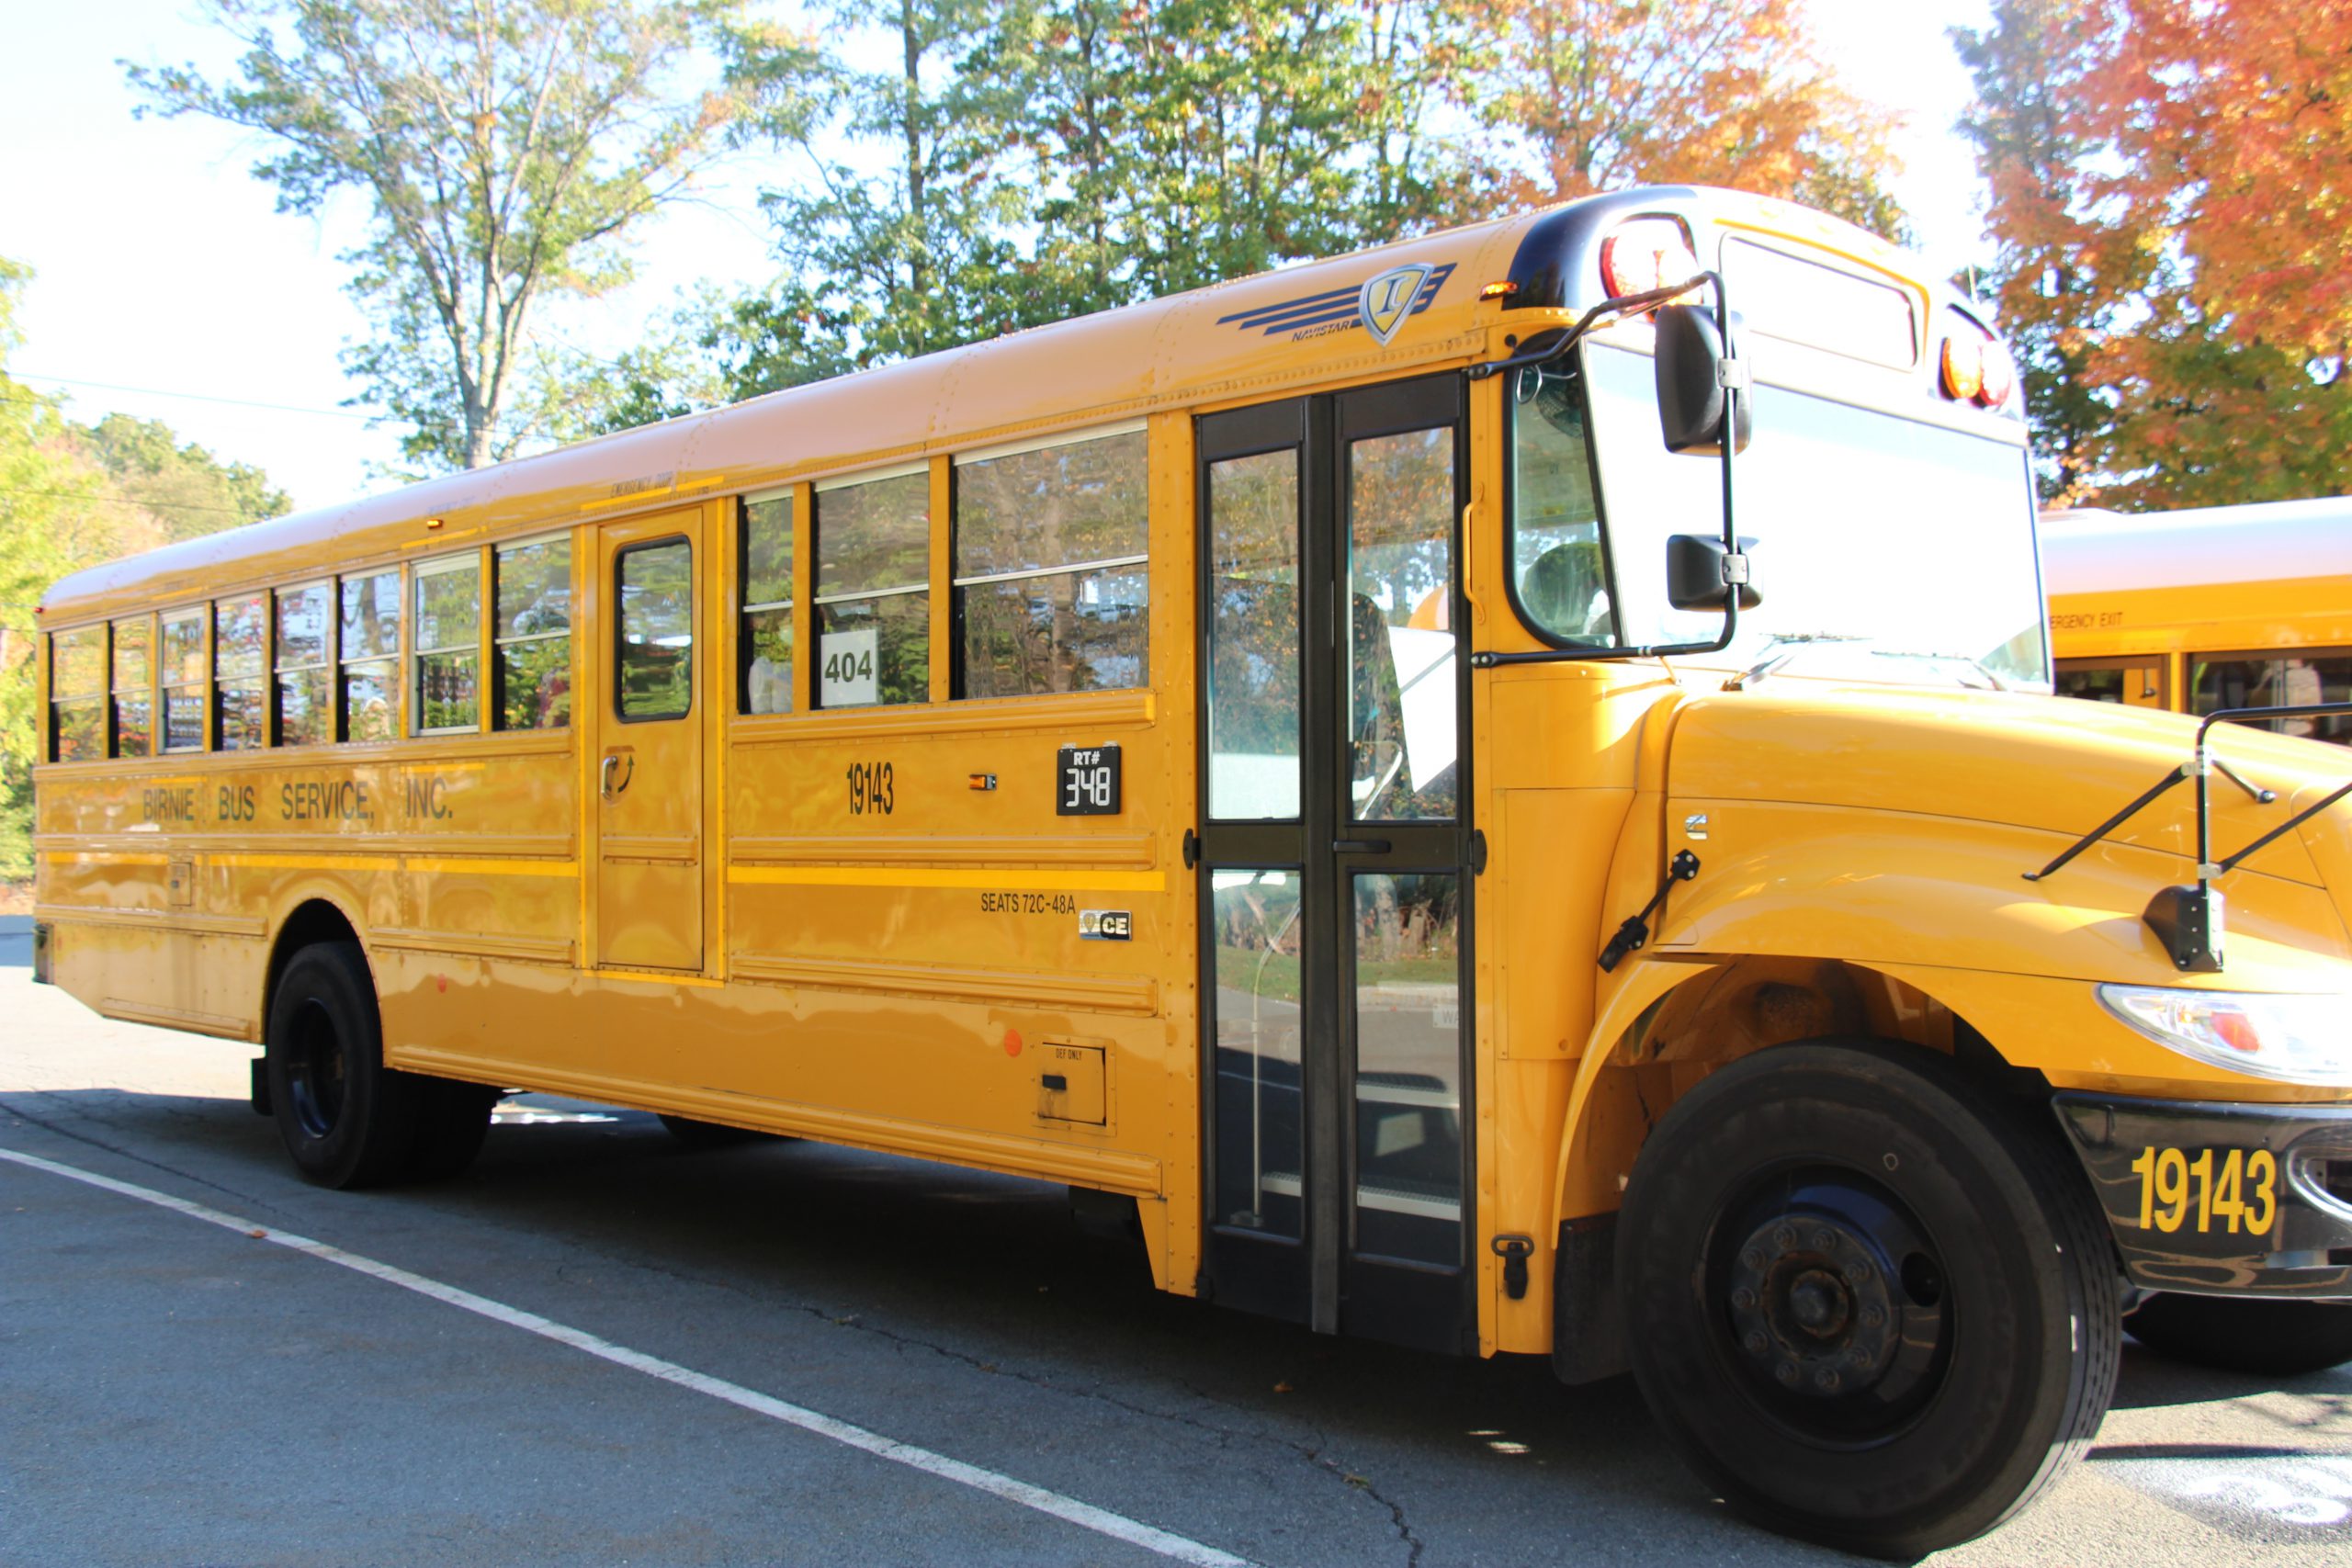 A yellow school bus